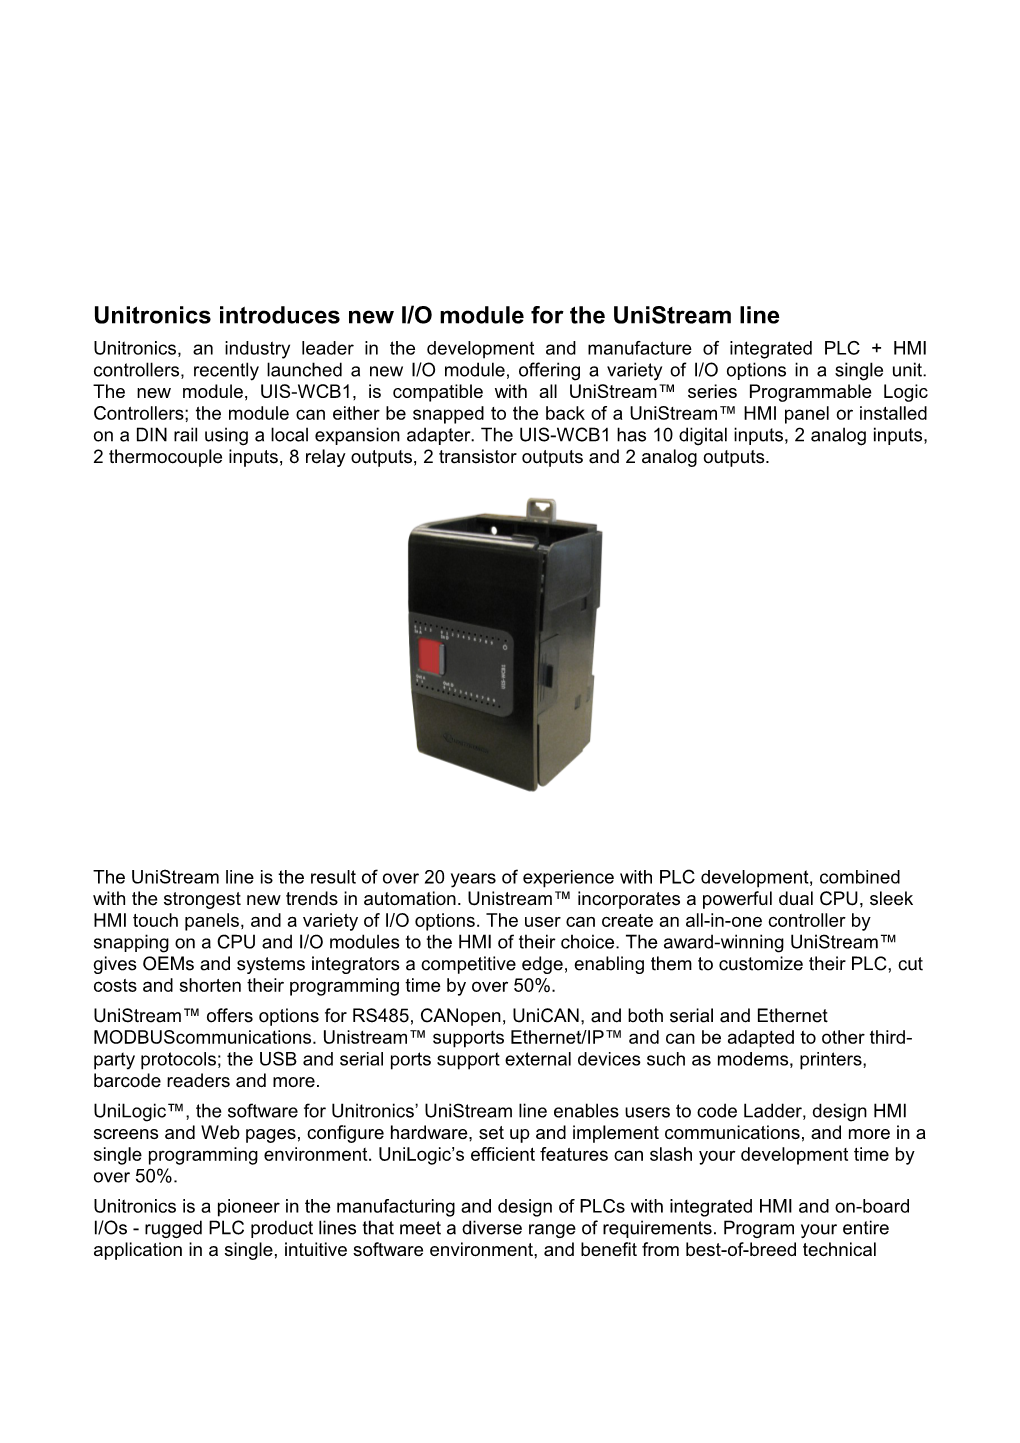 Unitronics Introduces New I/O Module for the Unistream Line